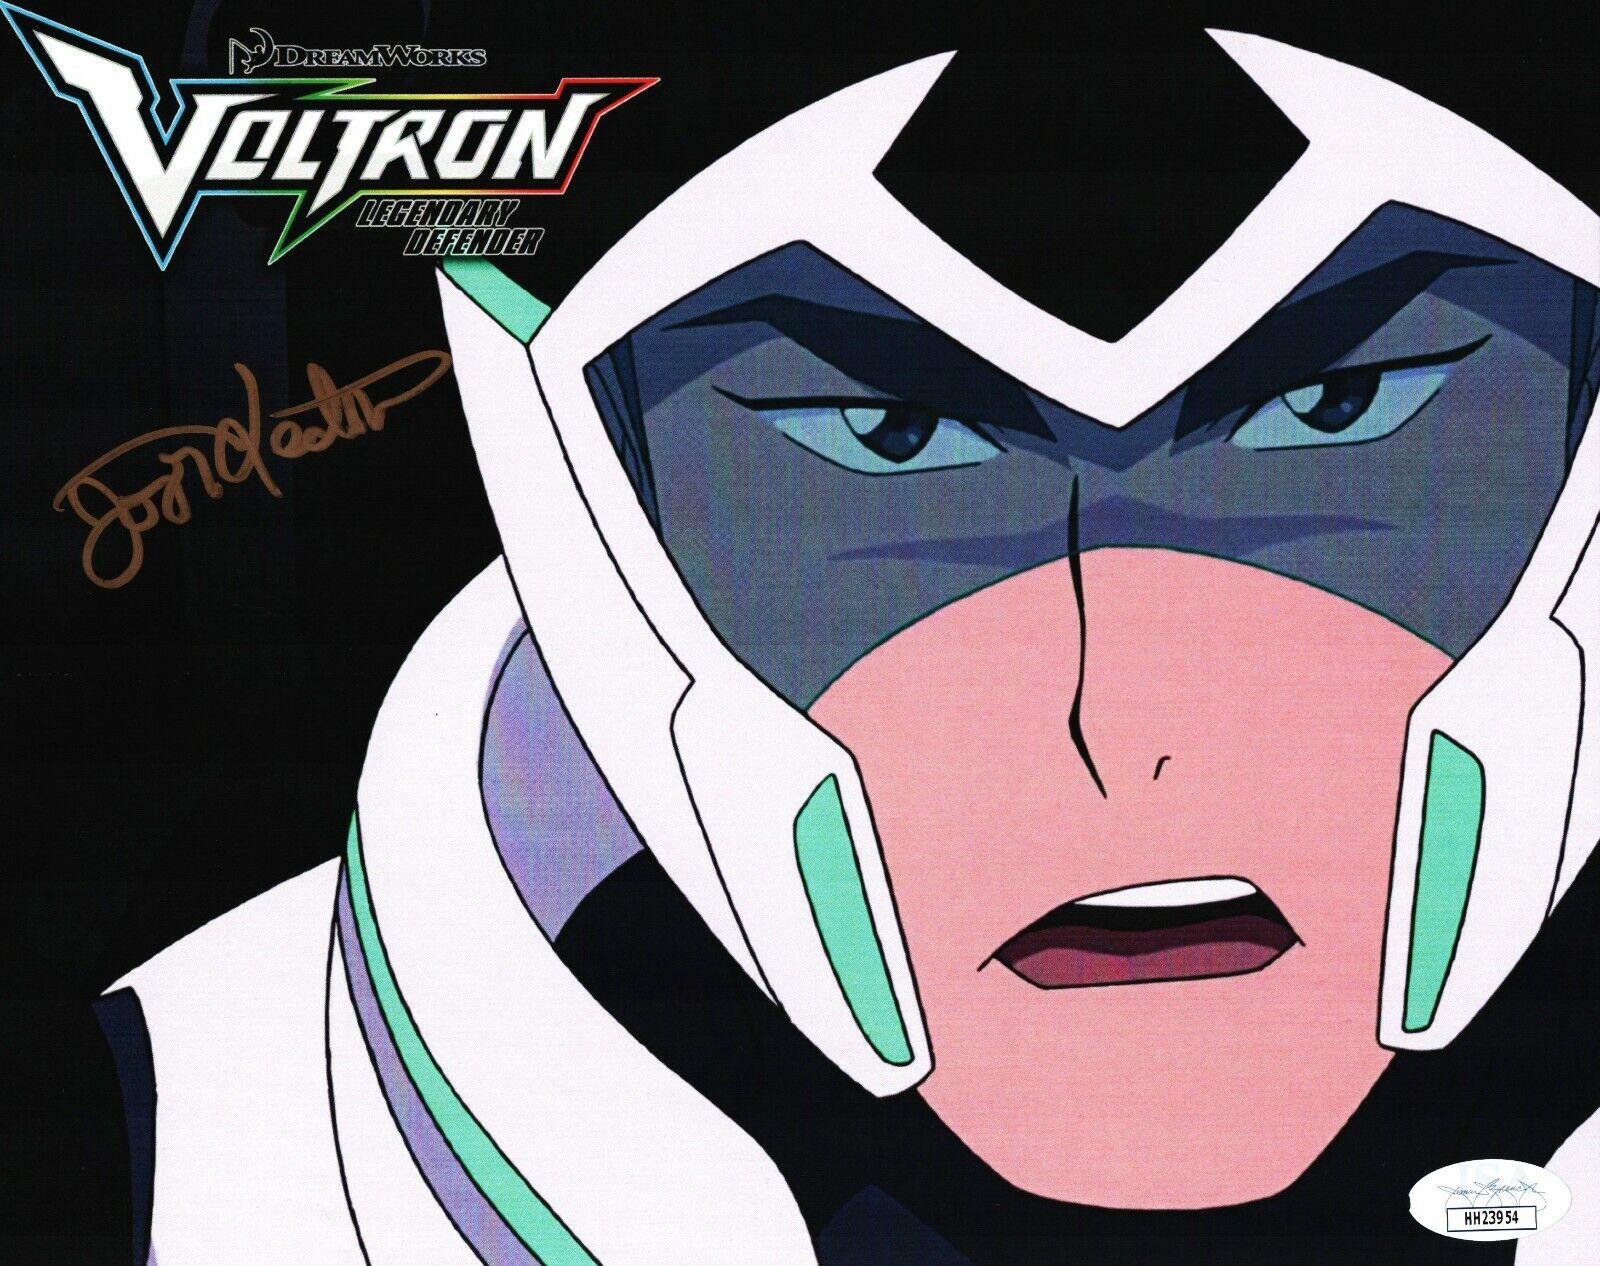 Josh Keaton Voltron Signed Autographed 8x10 Photo Poster painting JSA Certified COA